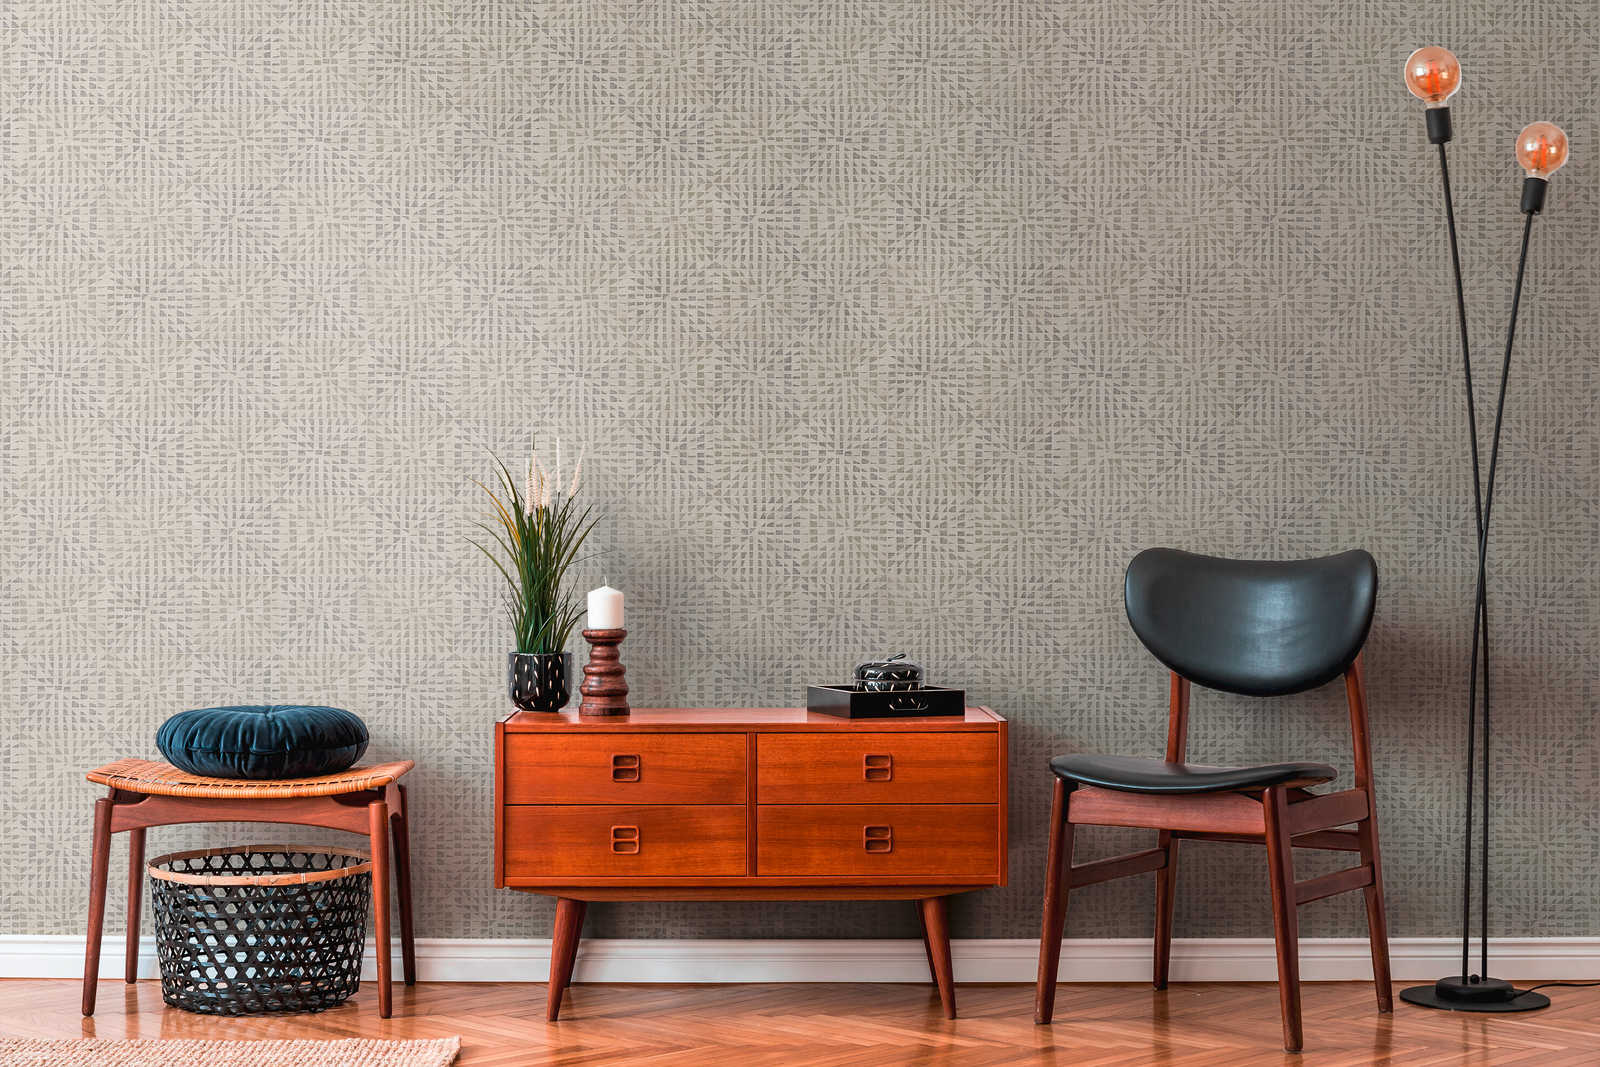             Ethno wallpaper with textured pattern & mosaic effect - grey, beige
        